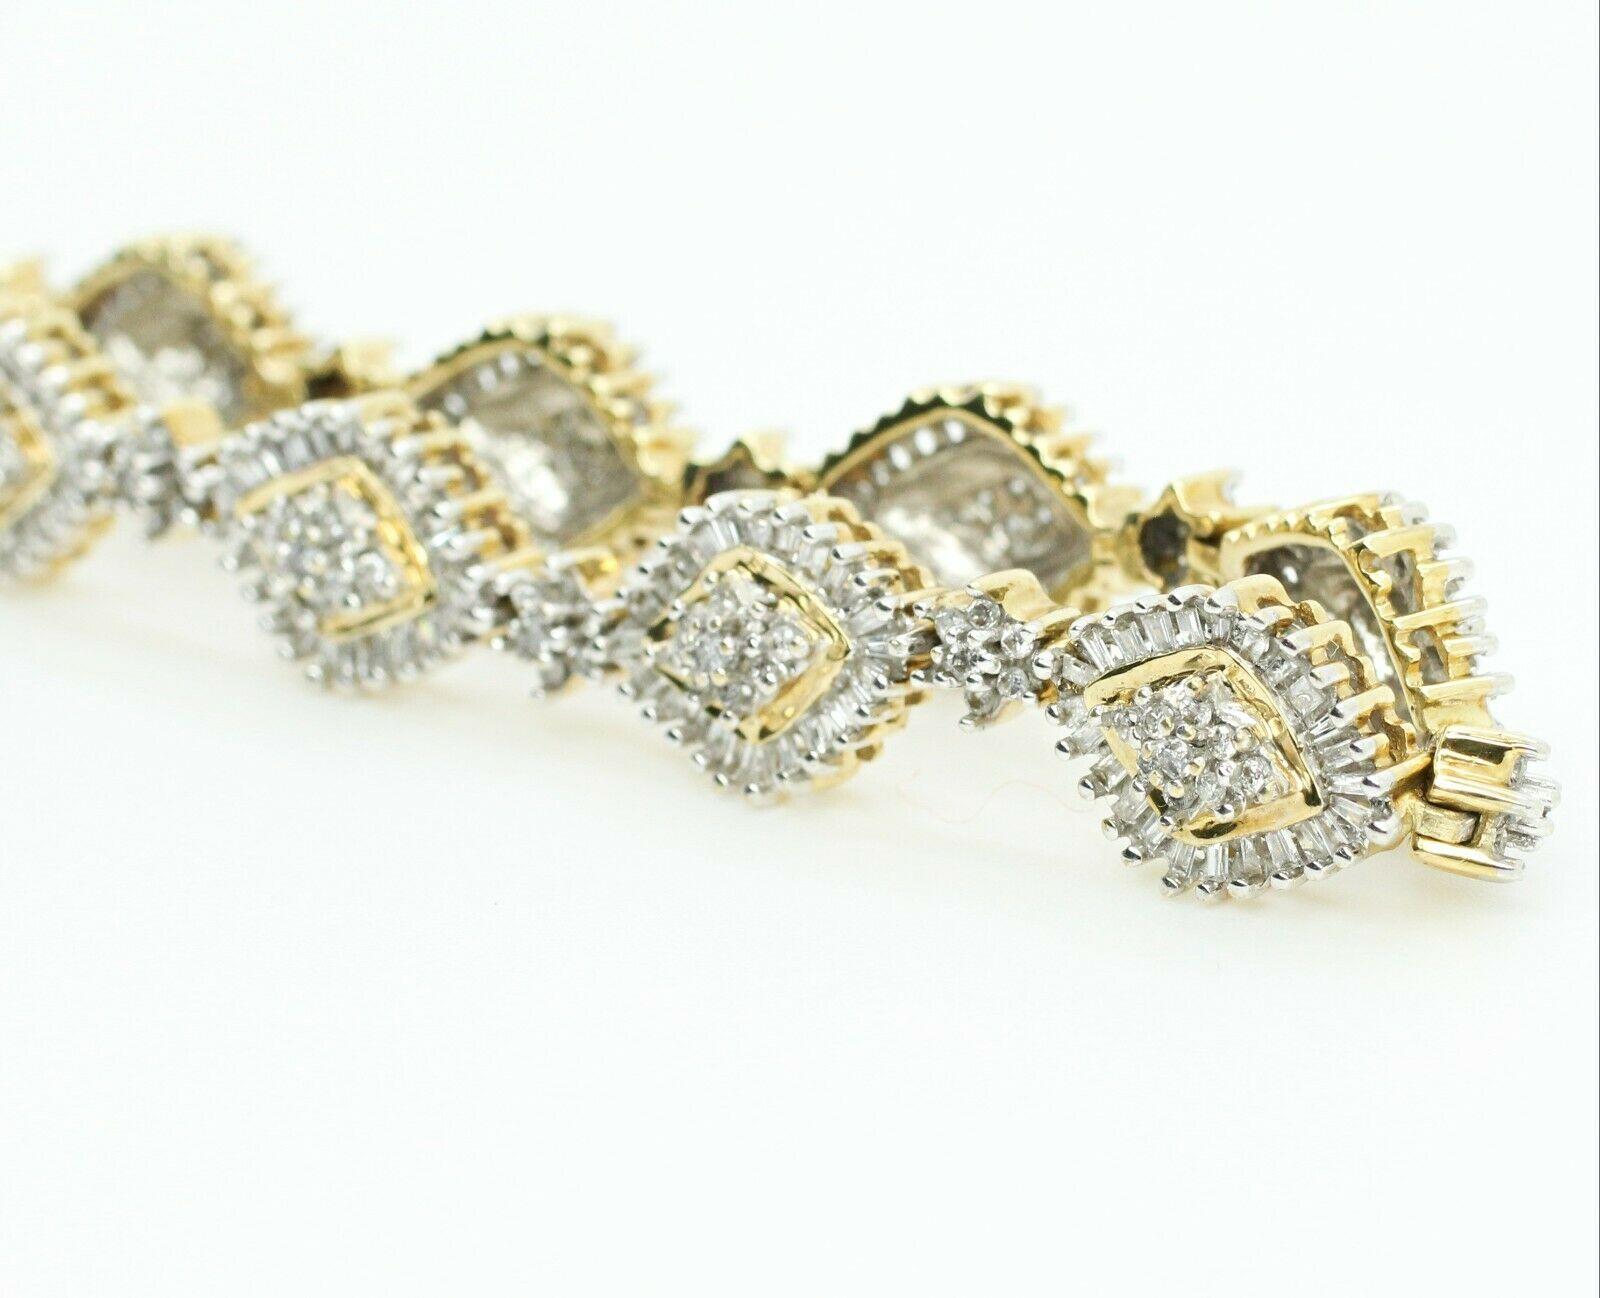 10k gold bracelet with diamonds